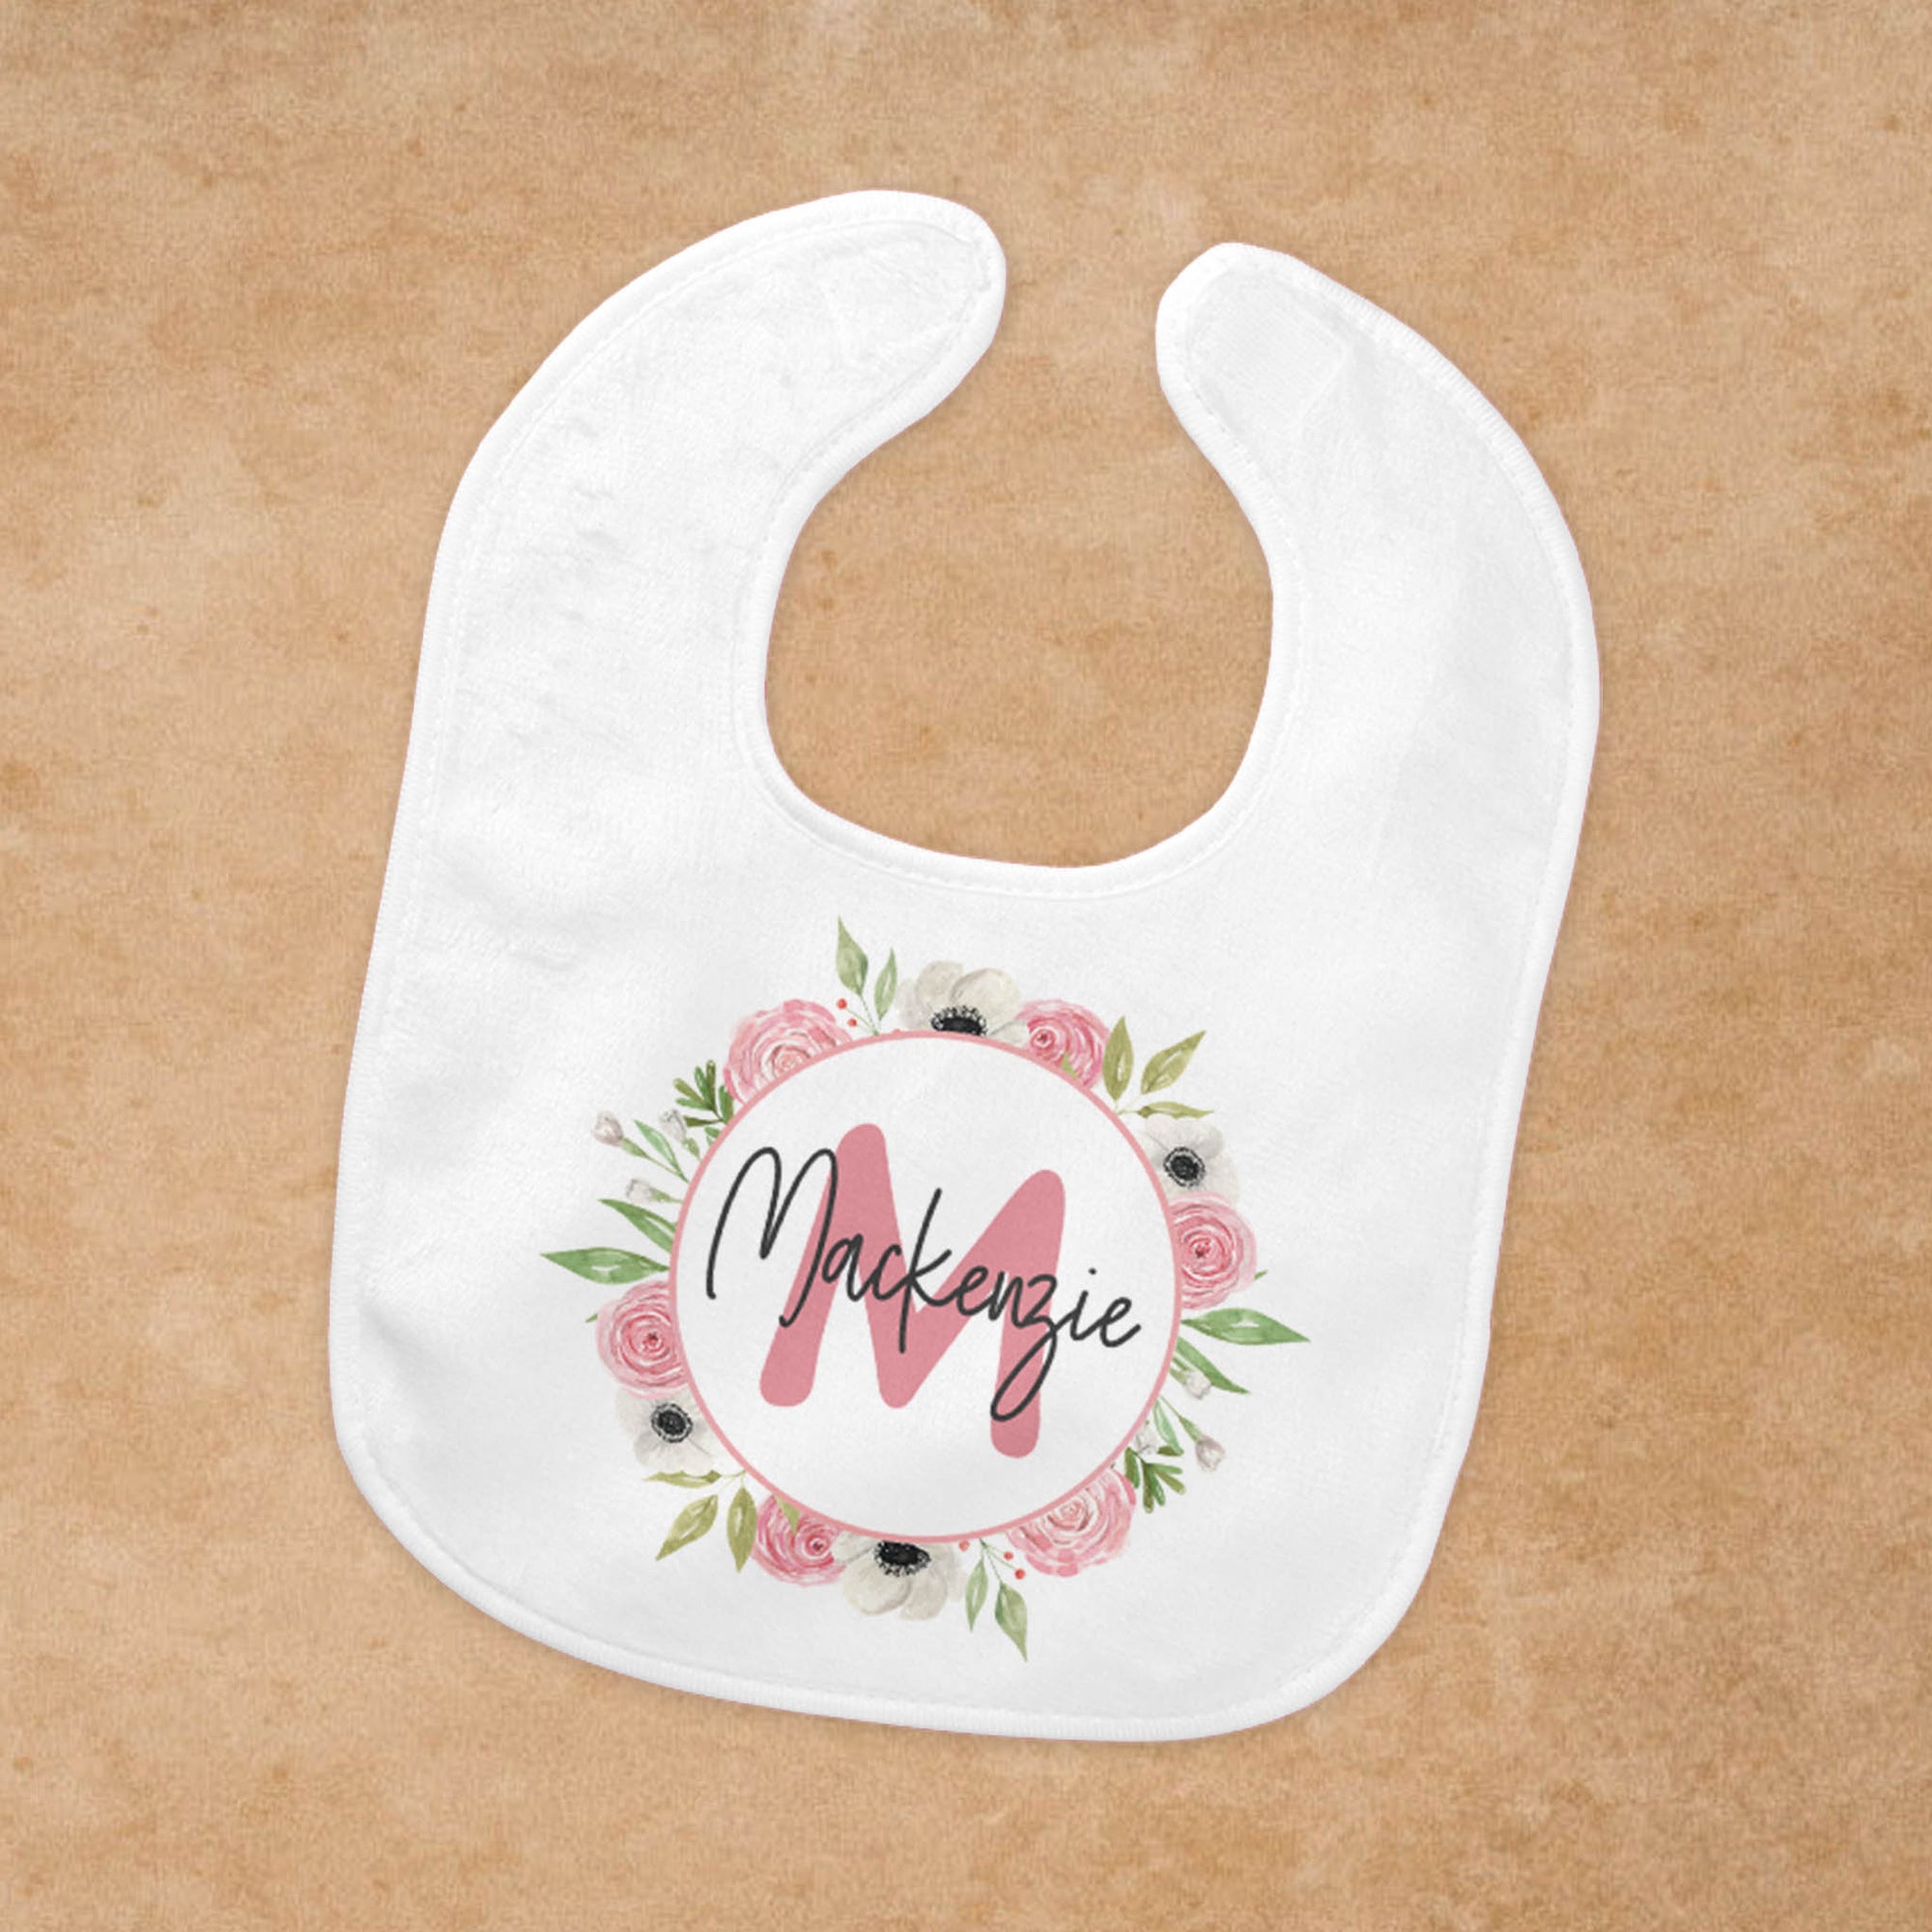 Personalized Baby Bib | Custom Baby Gifts | Baby Shower | Pink & White Rose Monogram